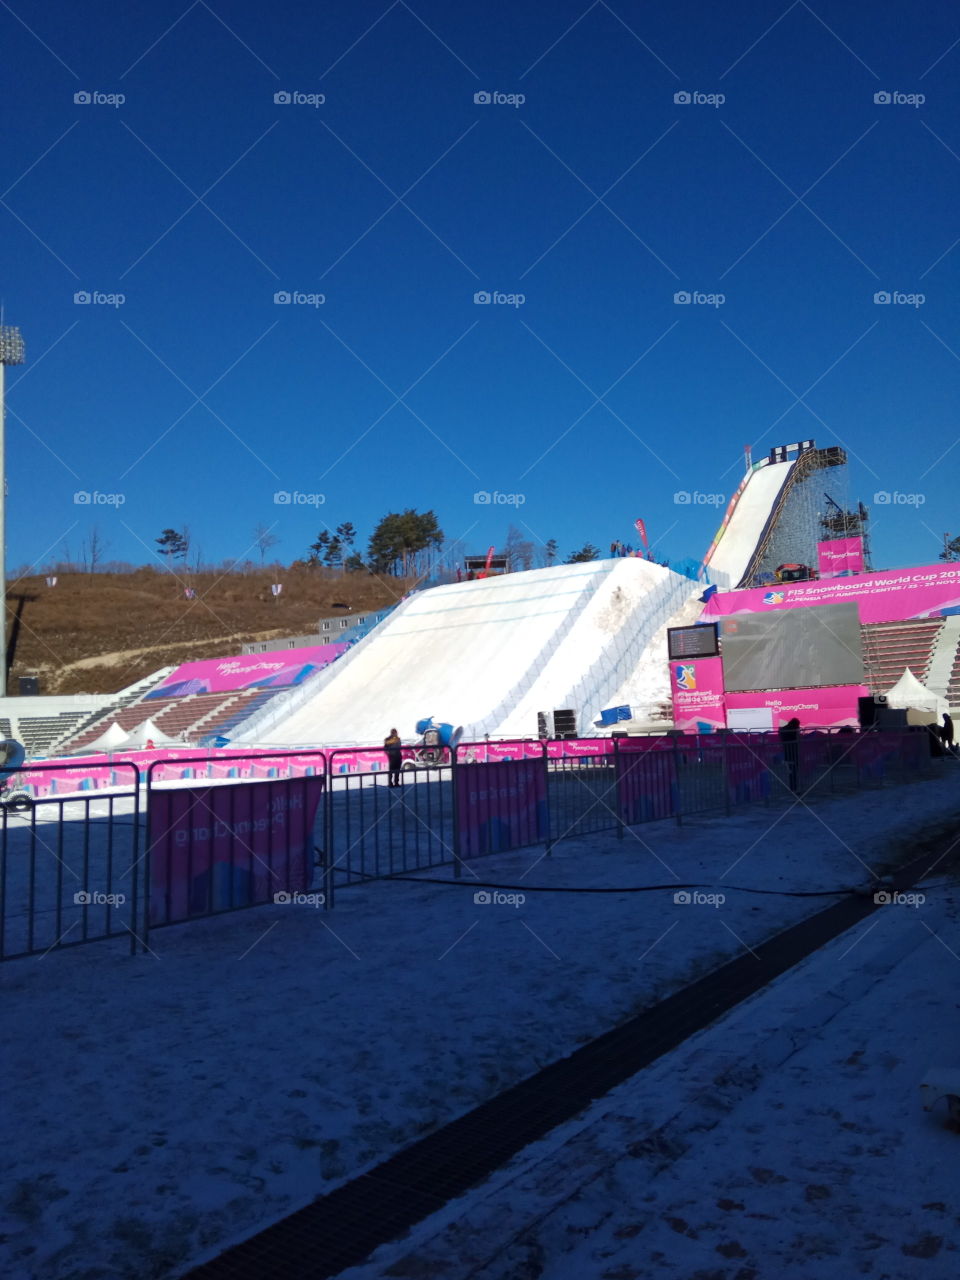 2018 Pyeongchang Winter Olympics Facility Test